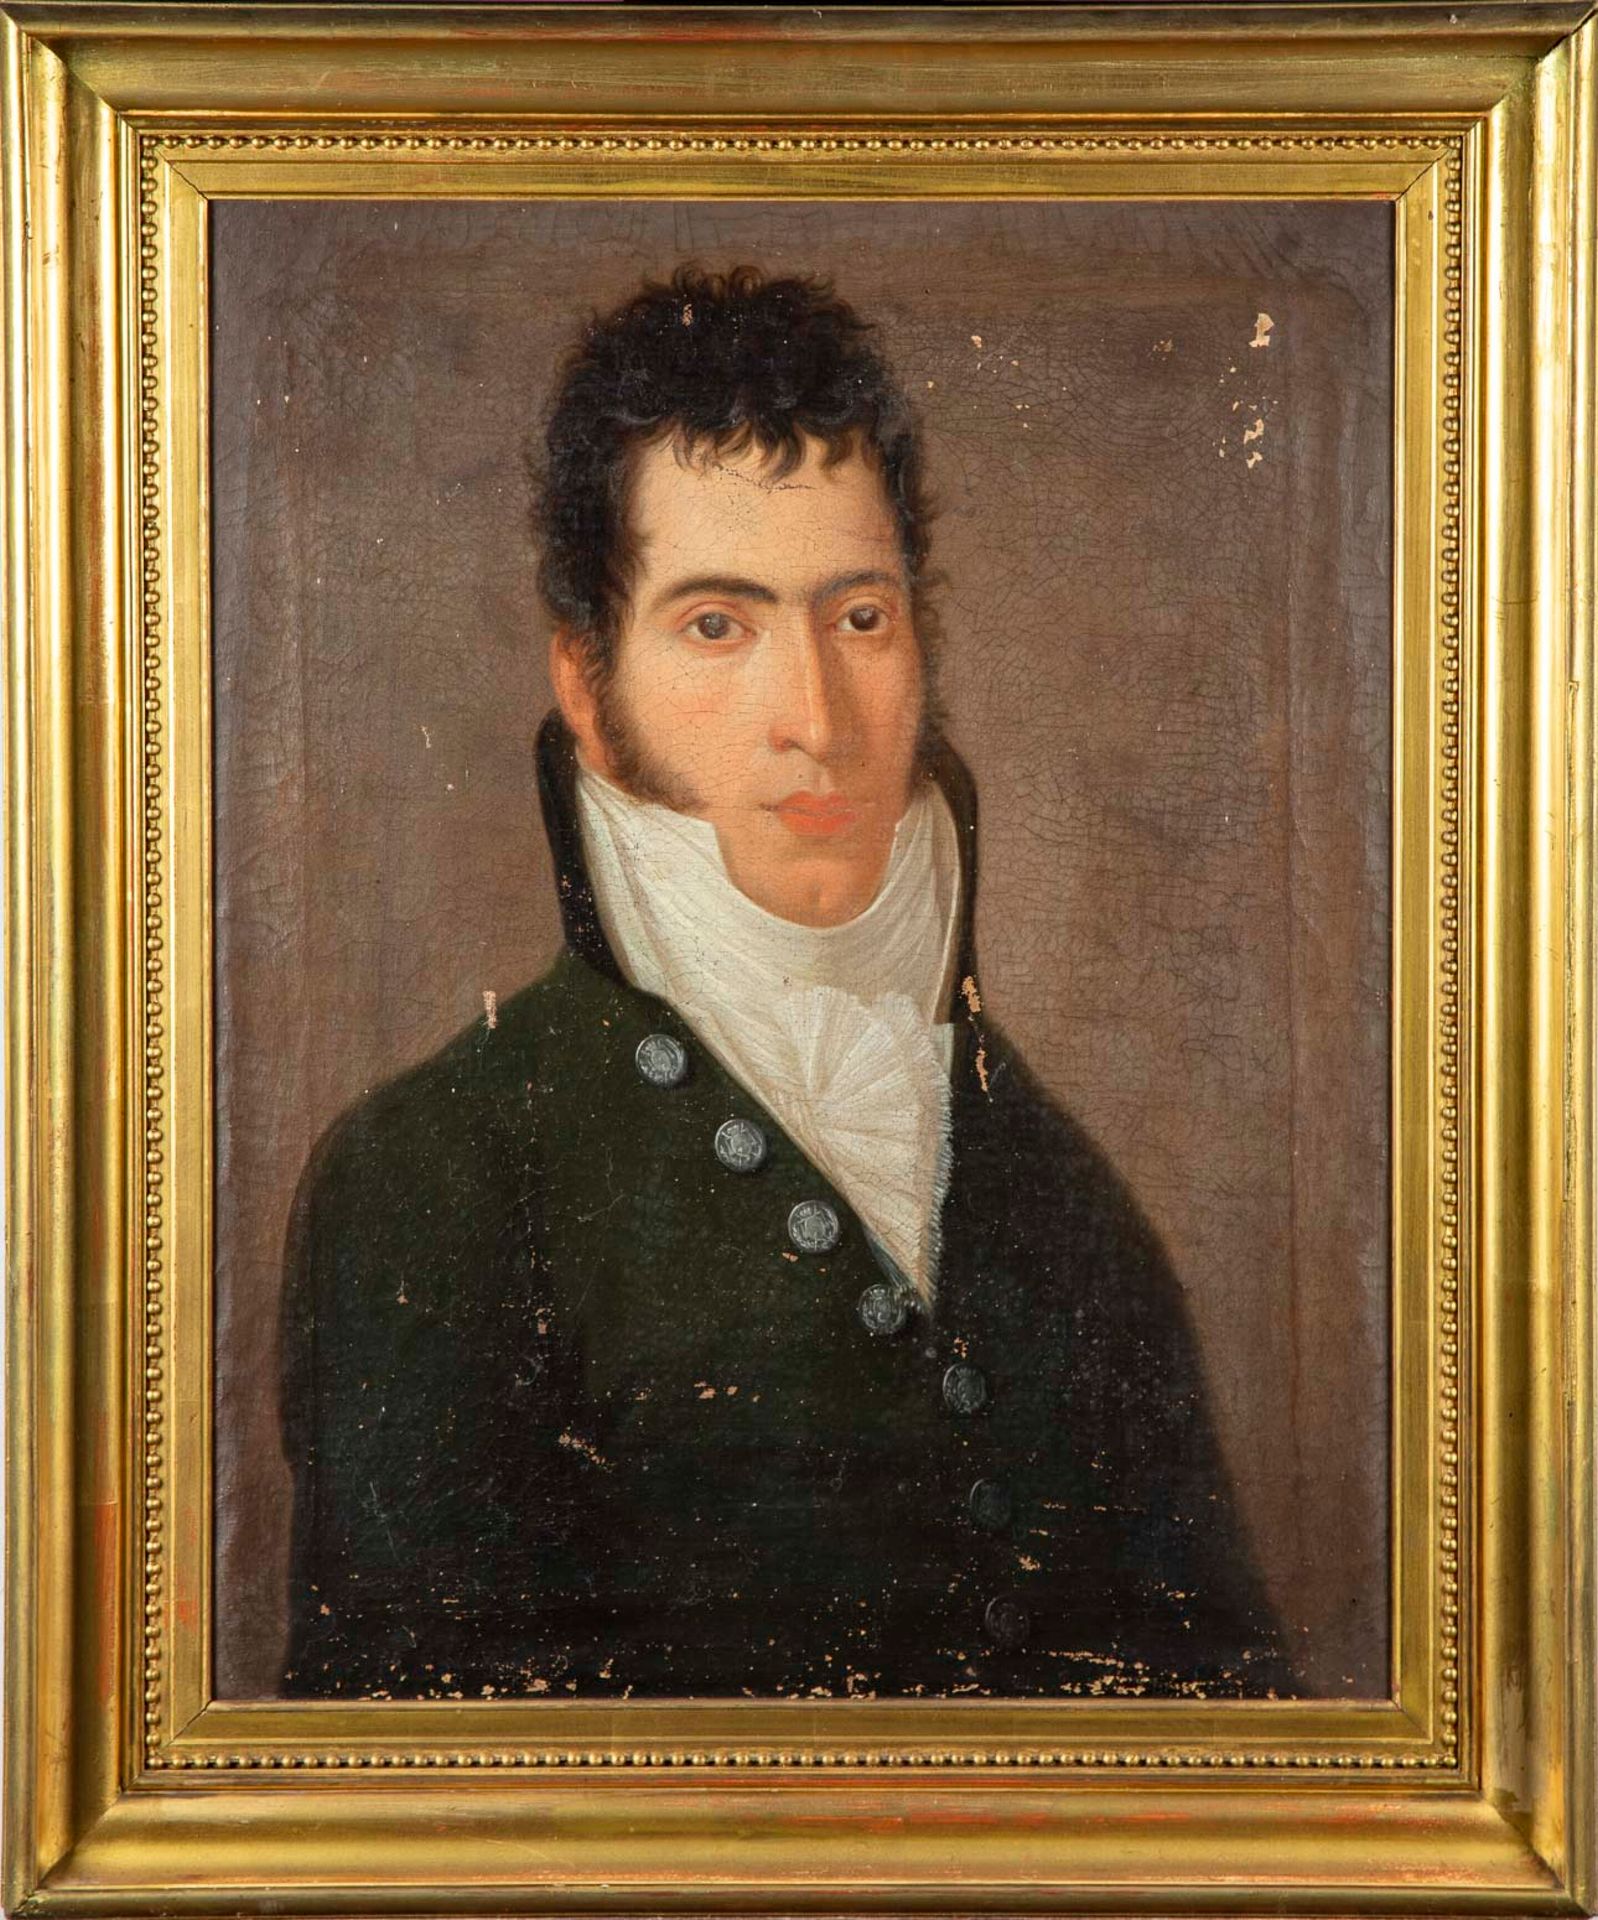 ECOLE FRANCAISE XIXè 19世纪的法国学校

打着白领带的男子肖像

布面油画

63 x 49 厘米

抬起，丢失